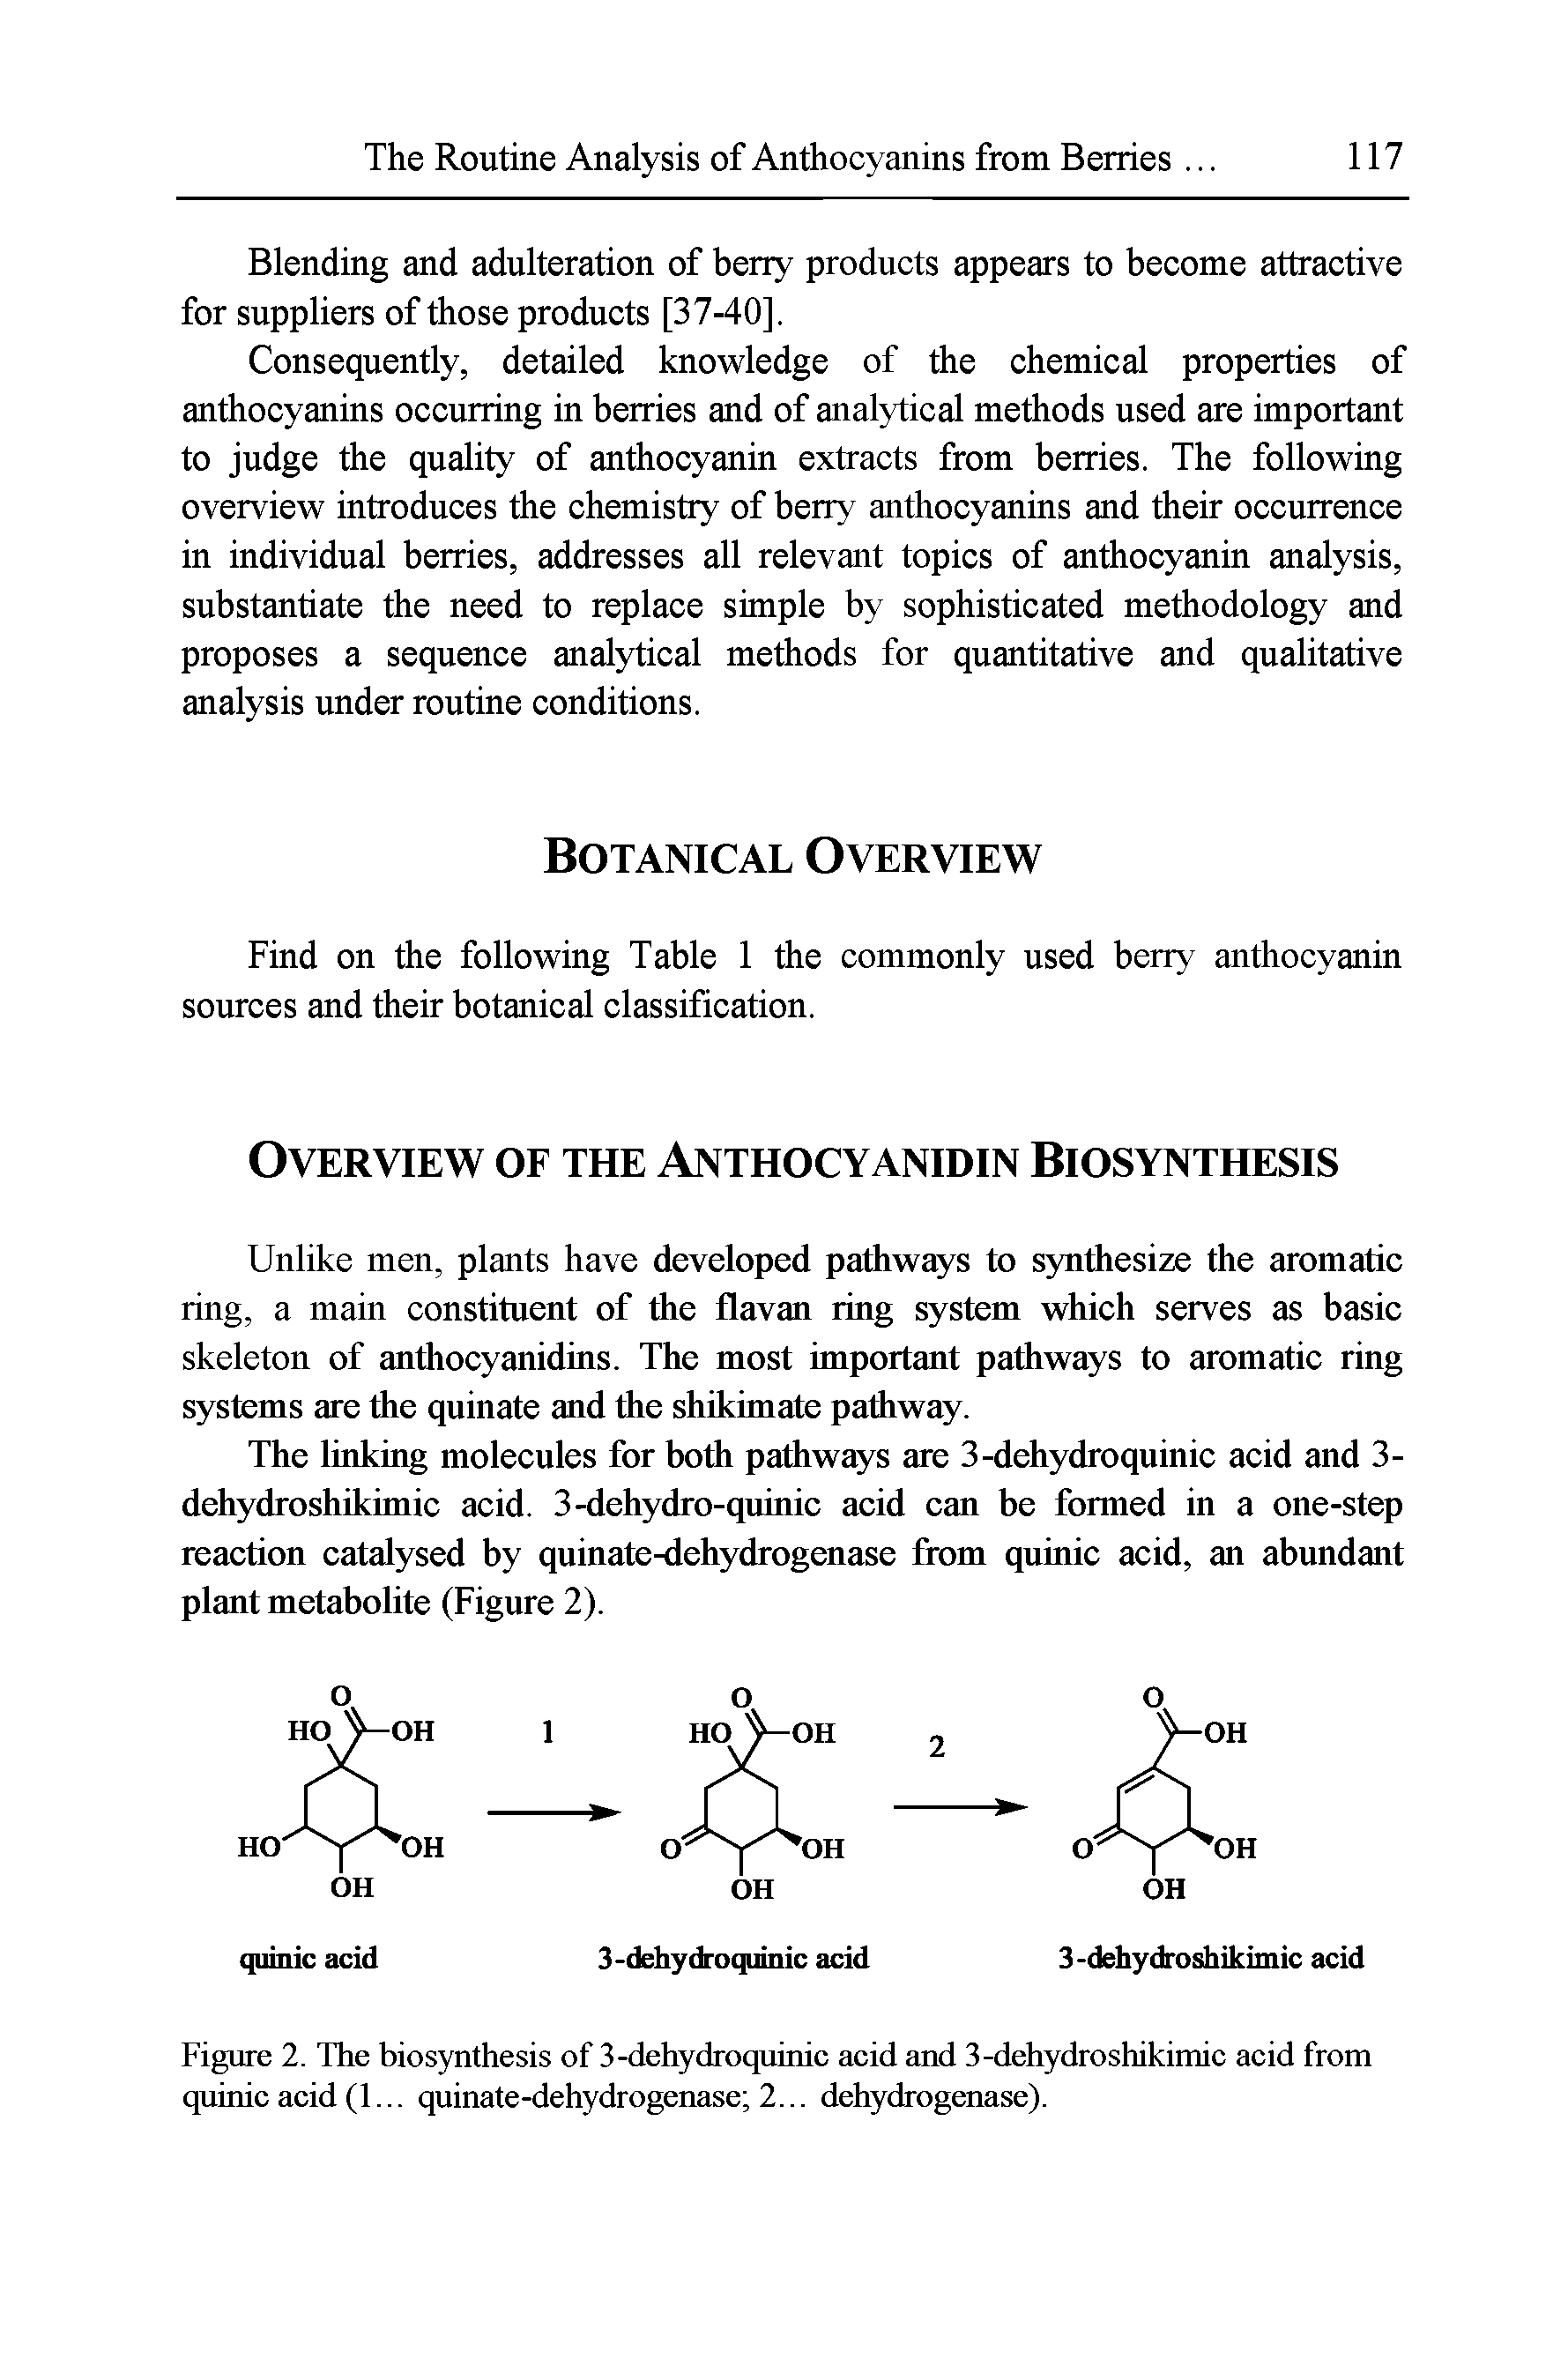 Figure 2. The biosynthesis of 3-dehydroquinic acid and 3-dehydroshikimic acid from quinic acid (1... quinate-dehydrogenase 2... dehydrogenase).